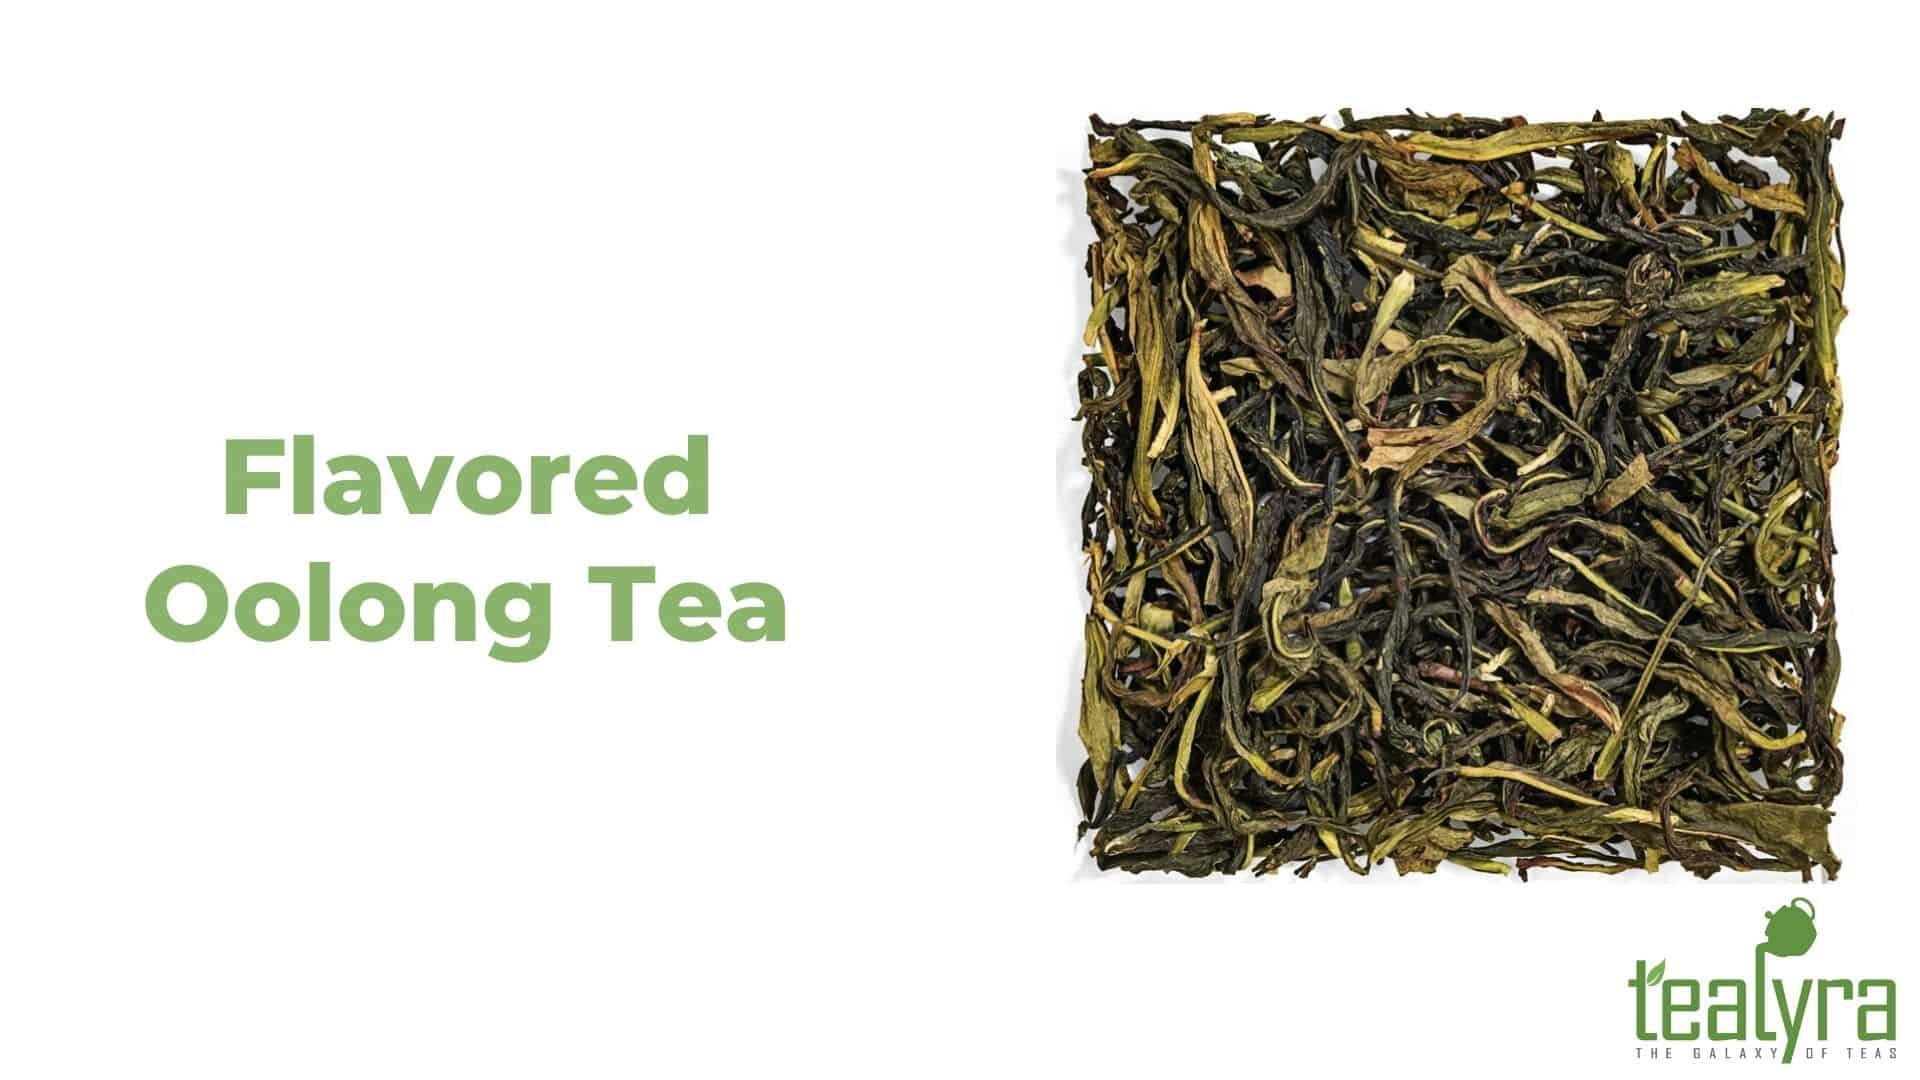 Image-flavored-oolong-tea